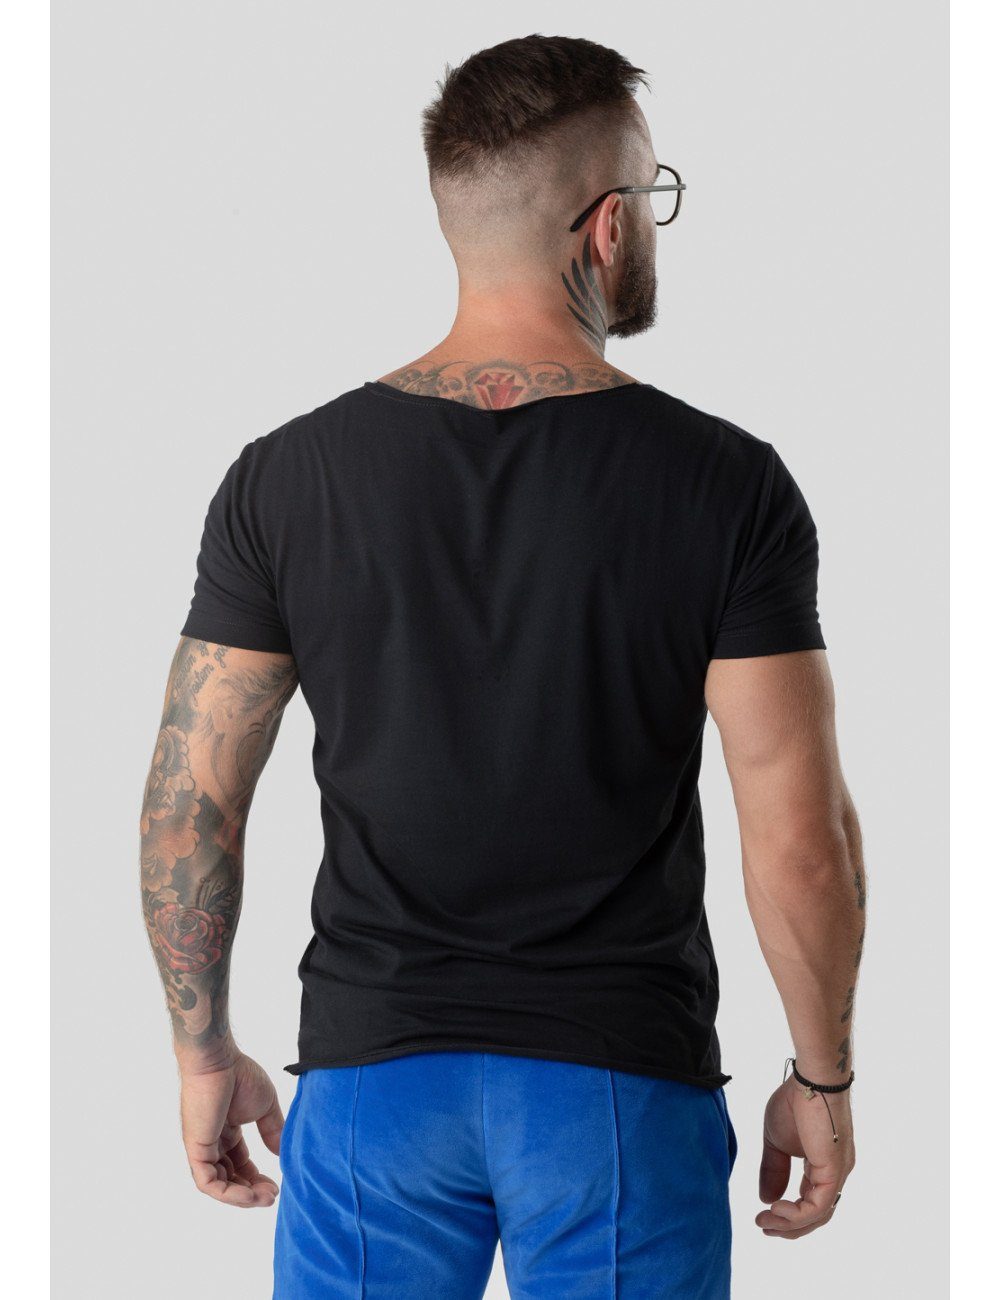 TRES AMIGOS T-Shirt Schwarz Trendiges Logostrickerei Shirt mit V-Neck